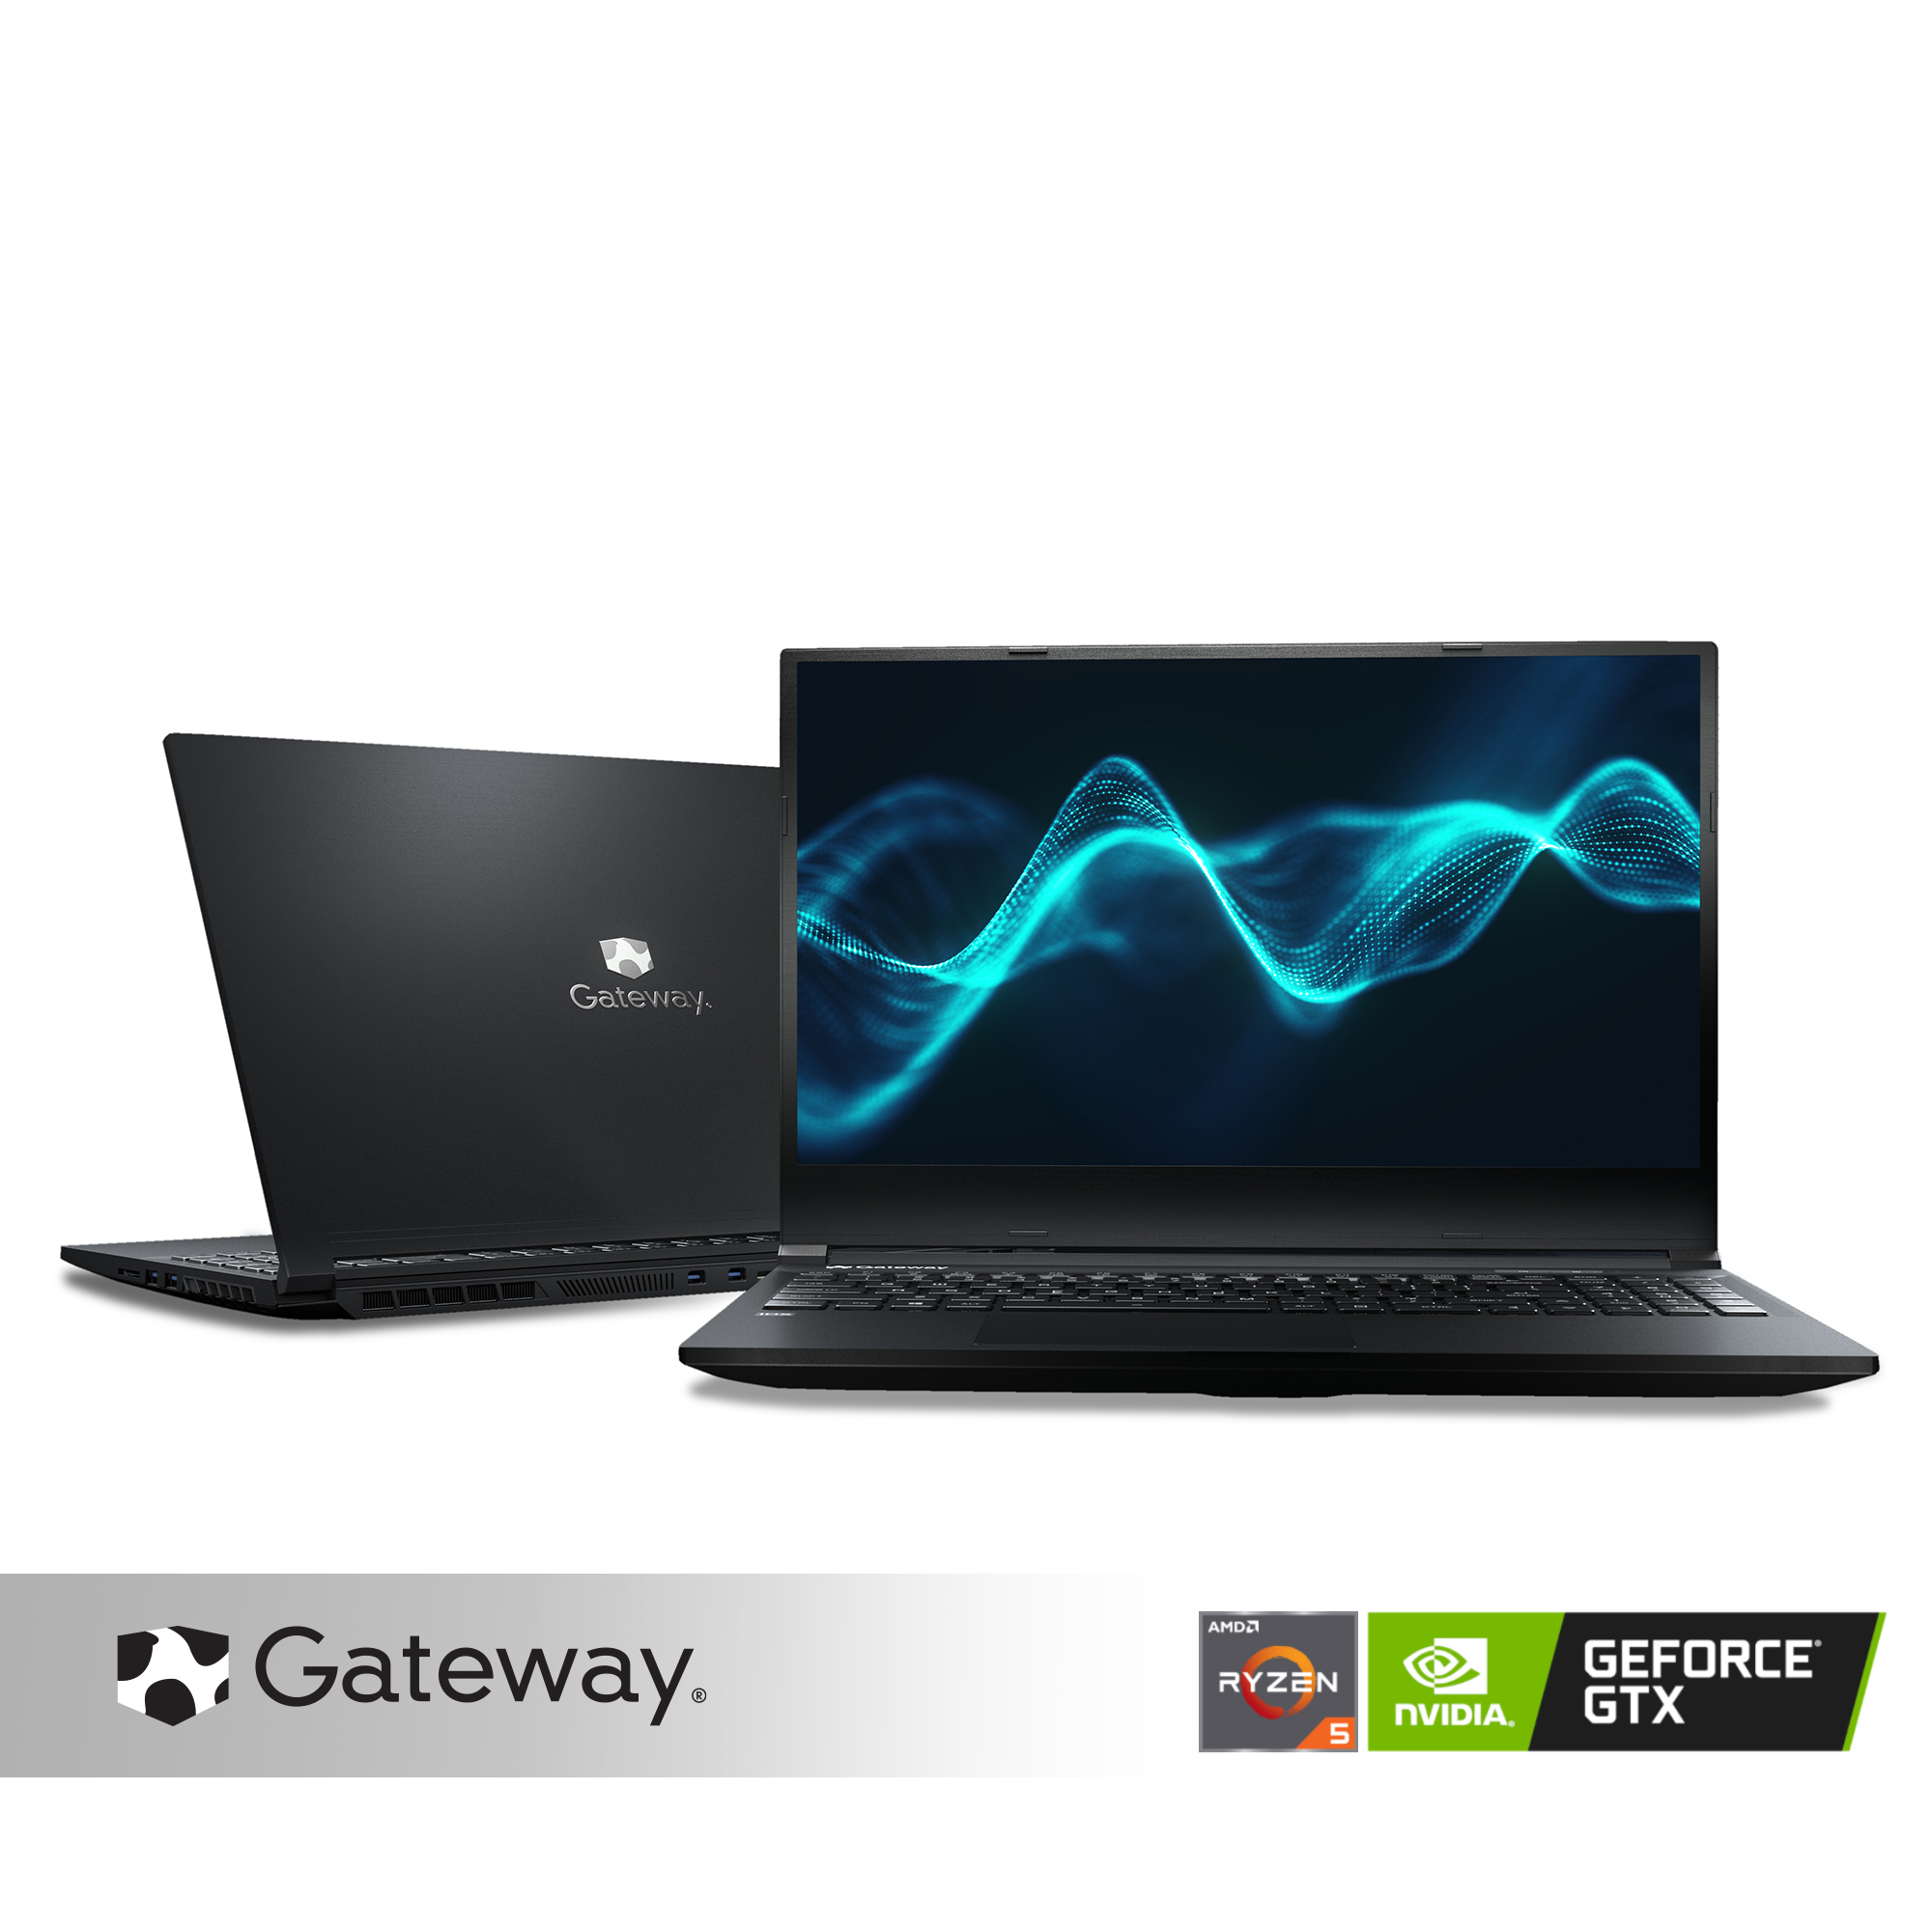 Gateway Creator Series 15.6" FHD Performance Notebook, AMD Ryzen 5 4600H, NVIDIA 1650 GTX, 8GB RAM, 256GB SSD $649